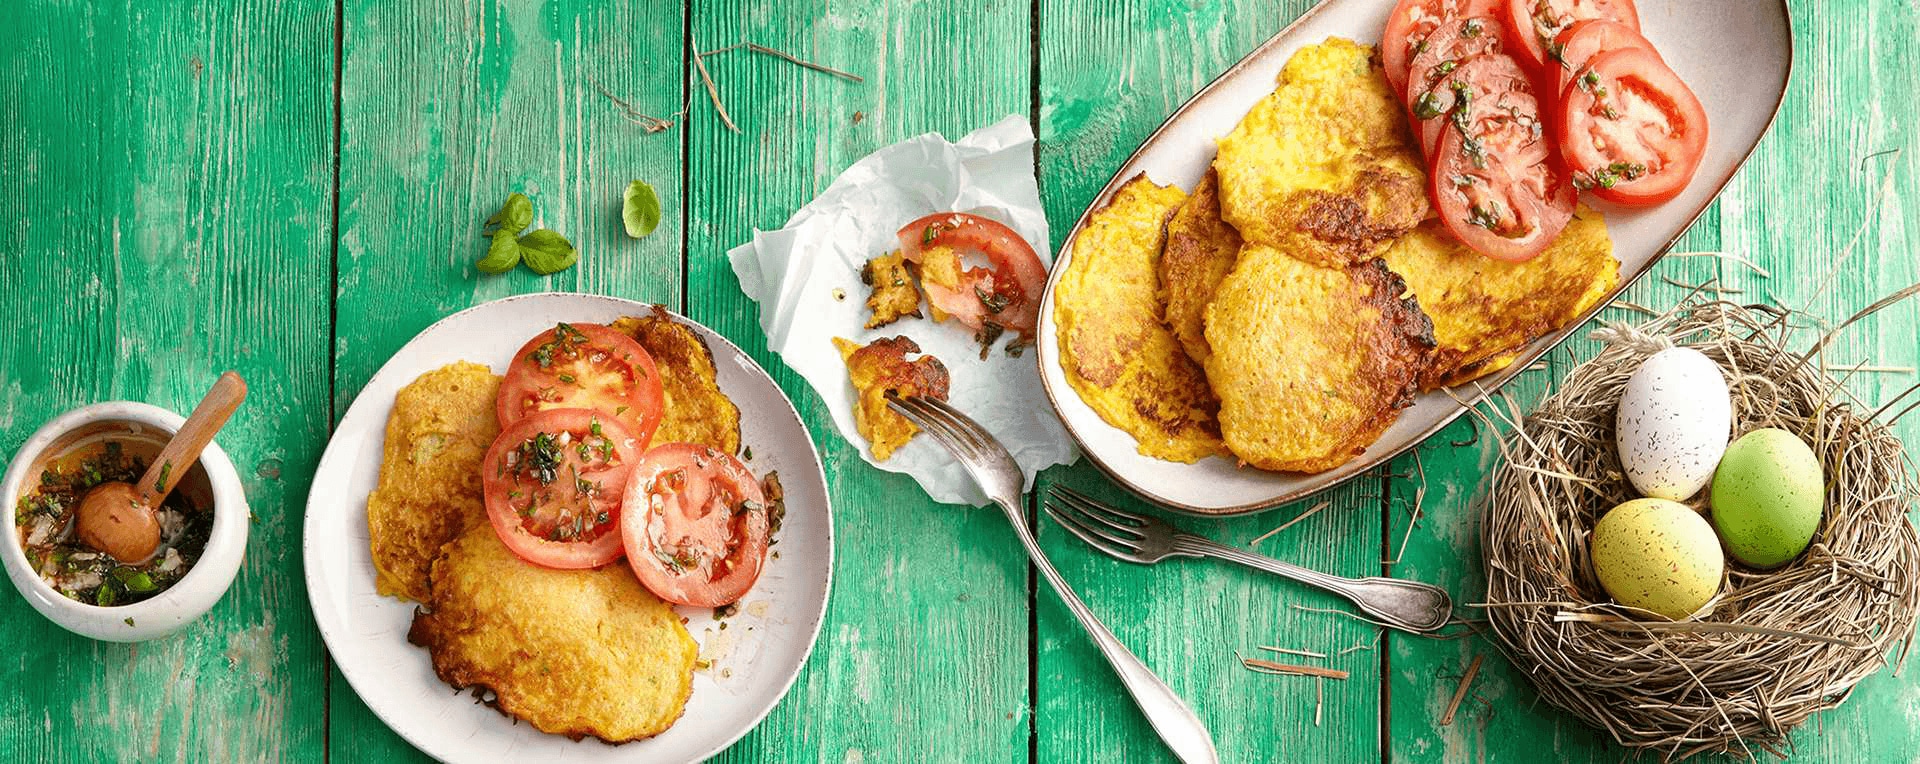 Zucchini-Möhren-Pancakes mit Tomatensalat